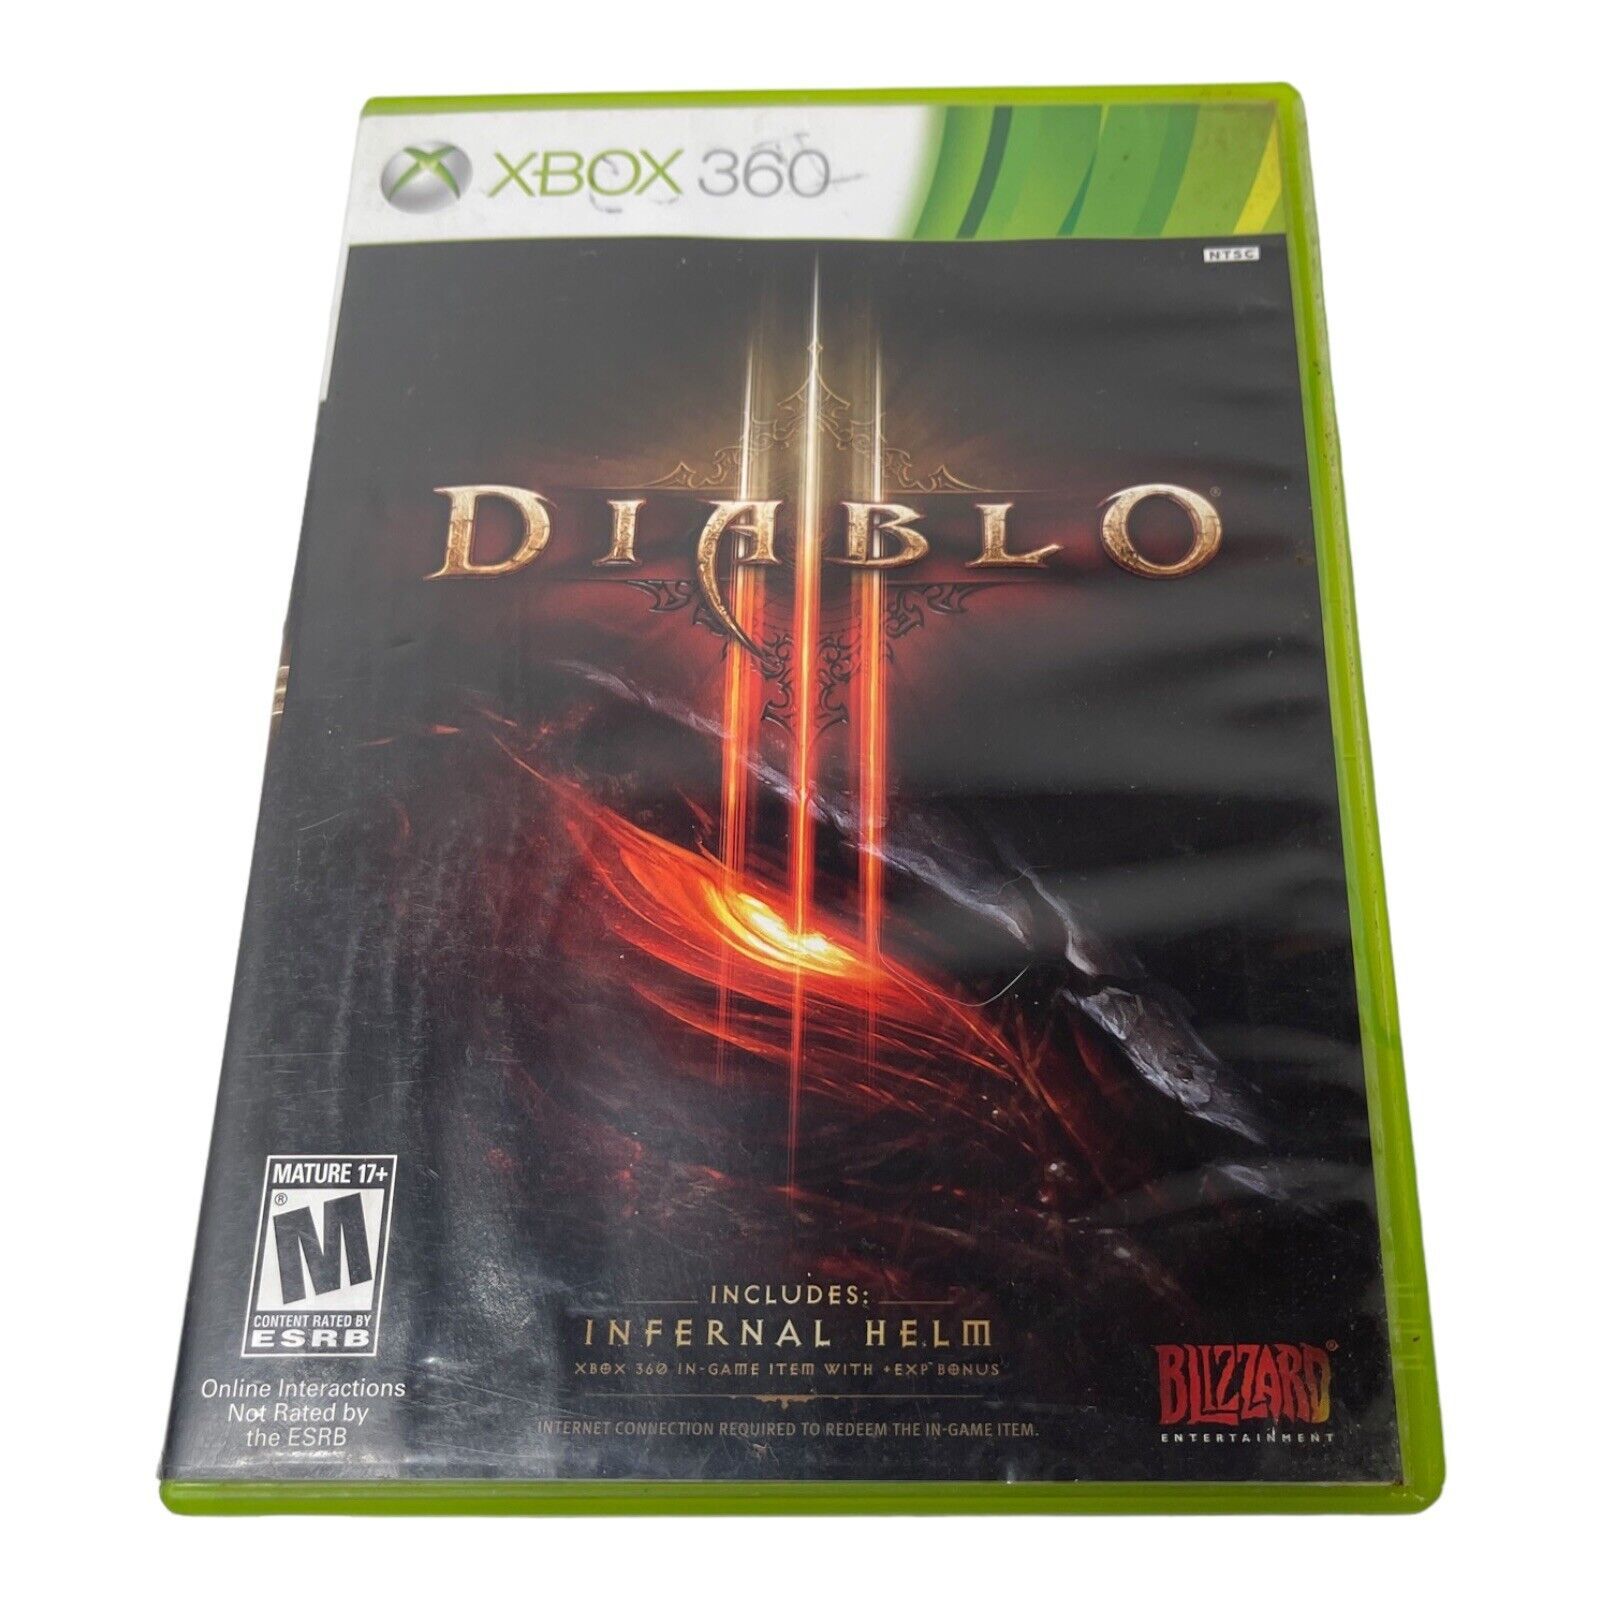 Diablo III (Microsoft Xbox 360, 2013) CIB Complete w/ Manual Video Game - $7.93